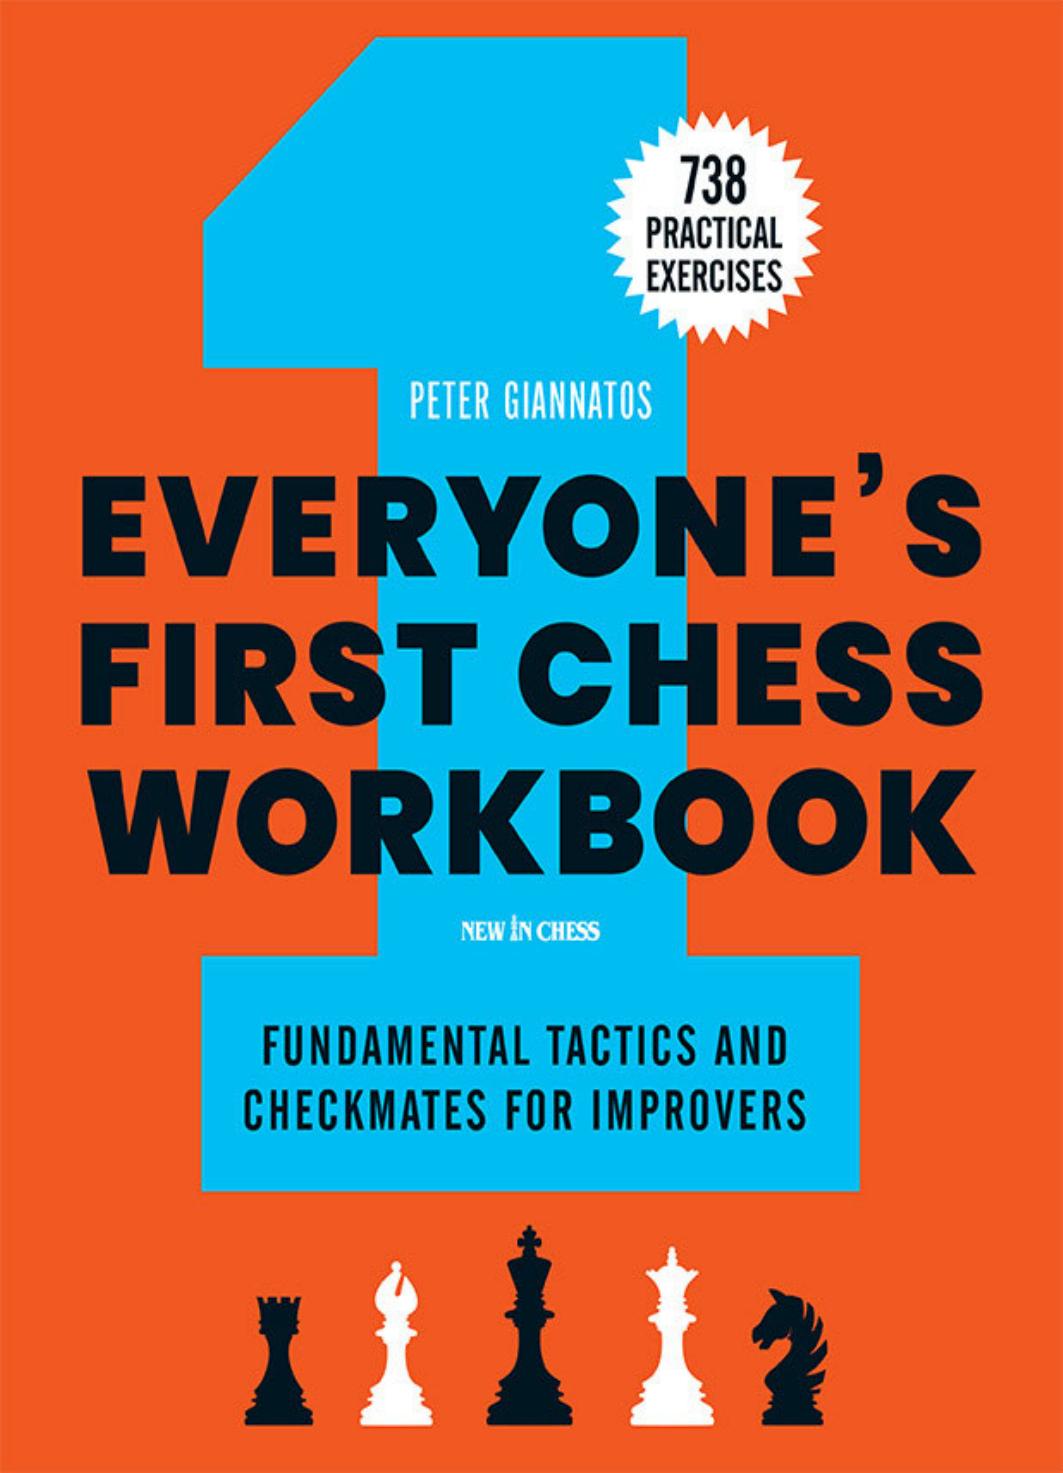 Everyoneâs First Chess Workbook by Unknown